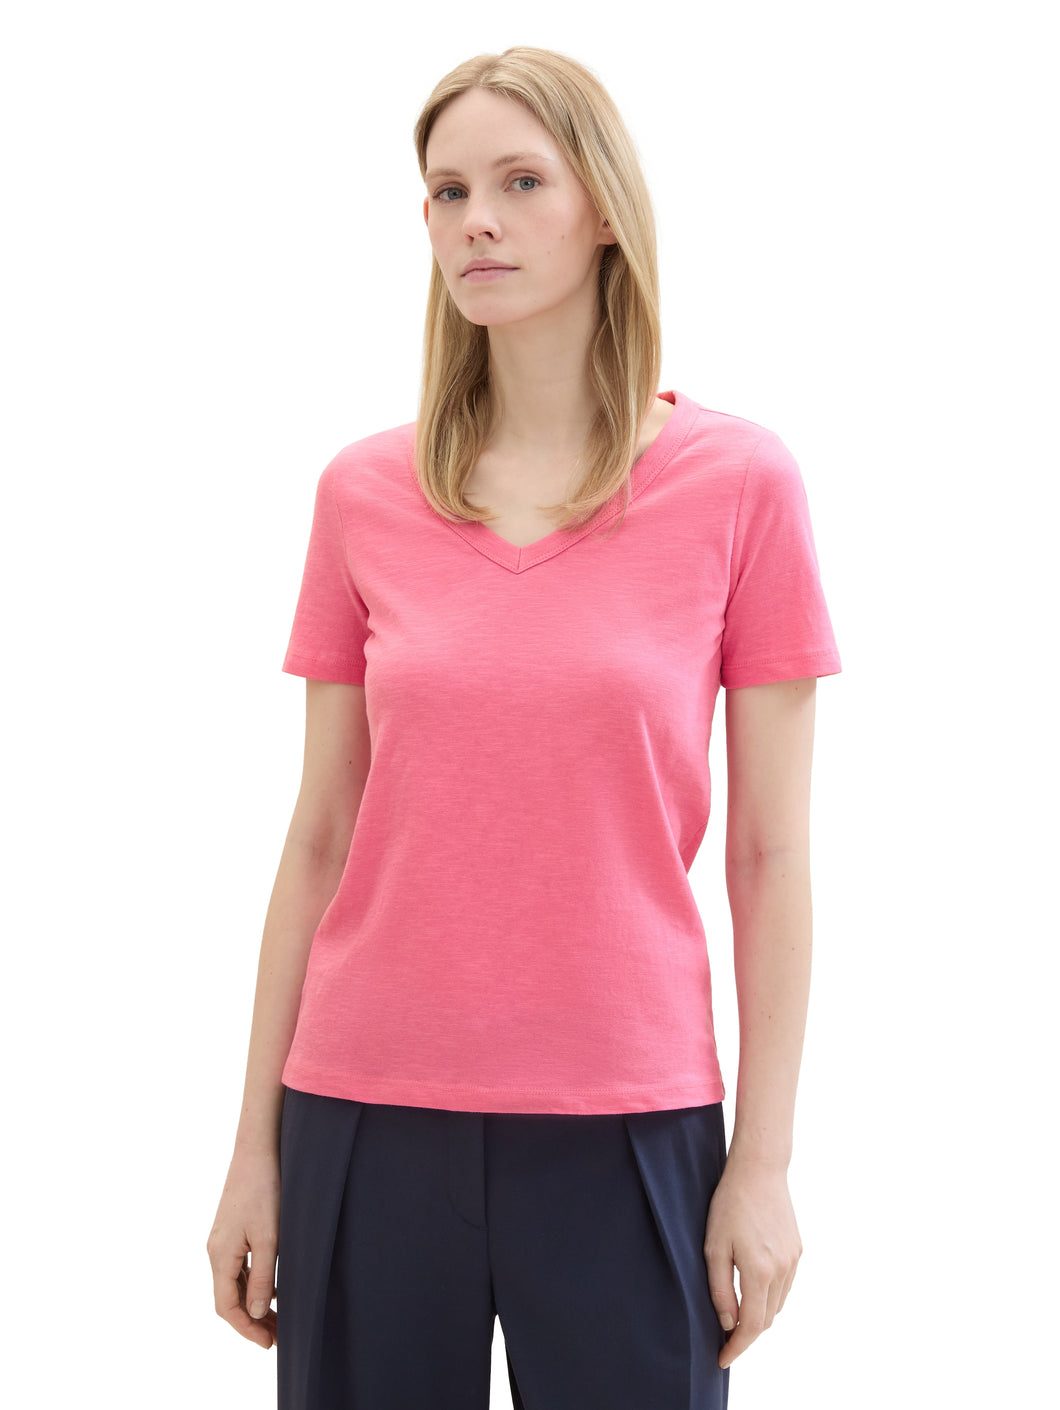 Tom Tailor Deep V-Neck Short Sleeve Cotton T-Shirt in Pink, Blue or White